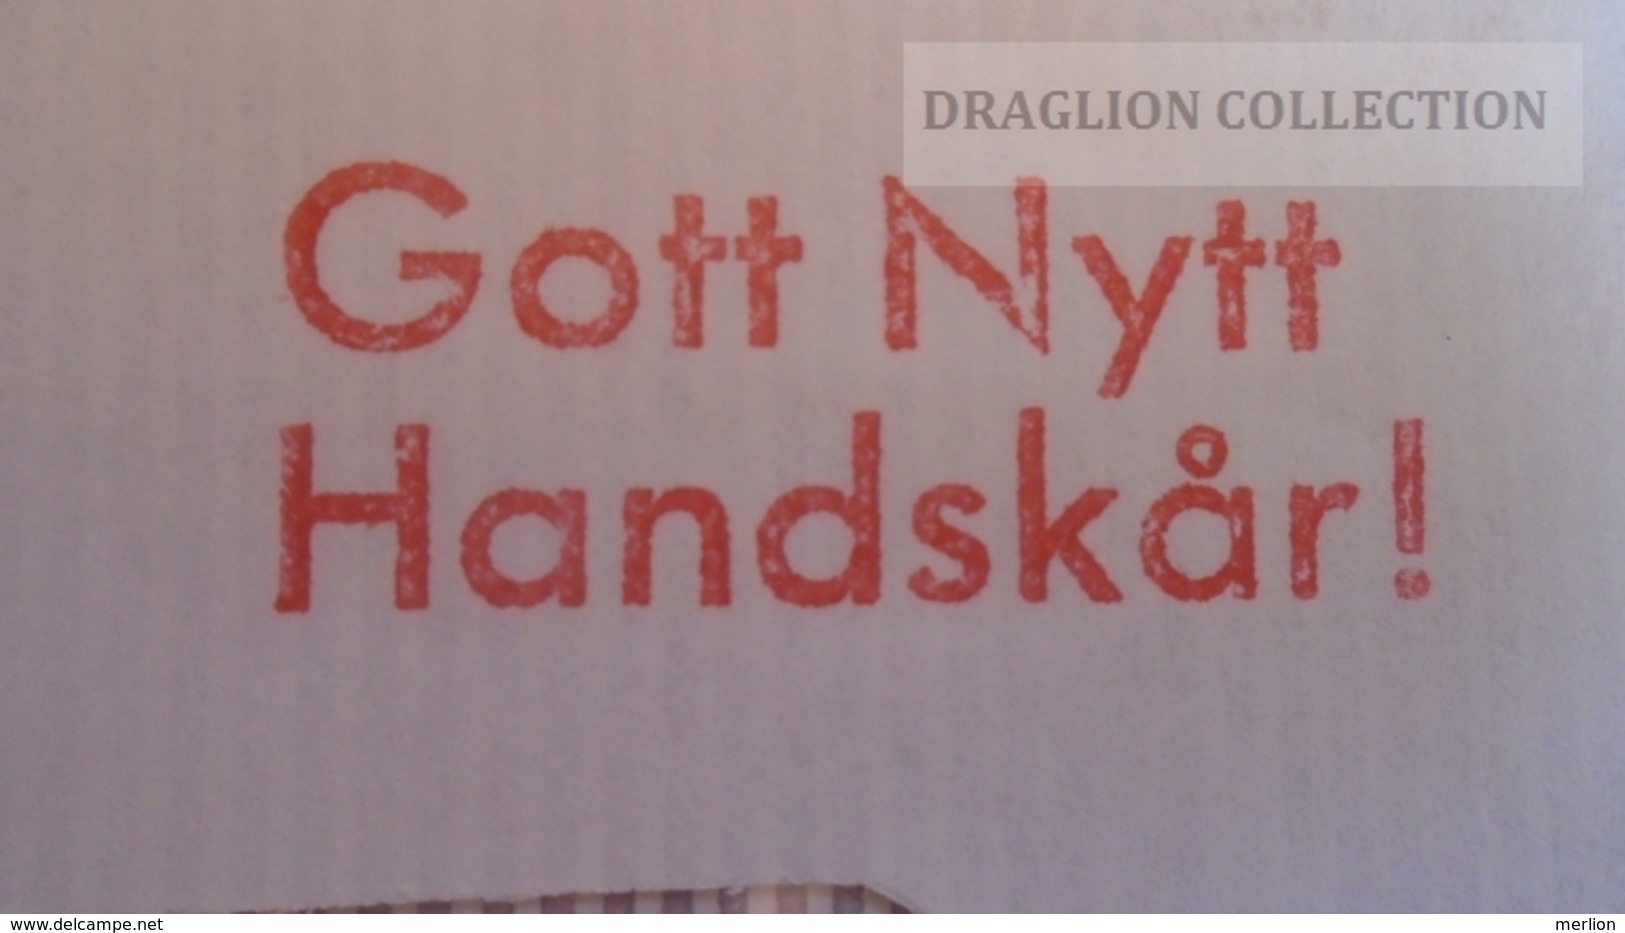 D165986 Sweden Sverige  -EMA- Freistempel -METER STAMP-Gott Nytt Handskar!  Stockholm 1982 - Machine Labels [ATM]